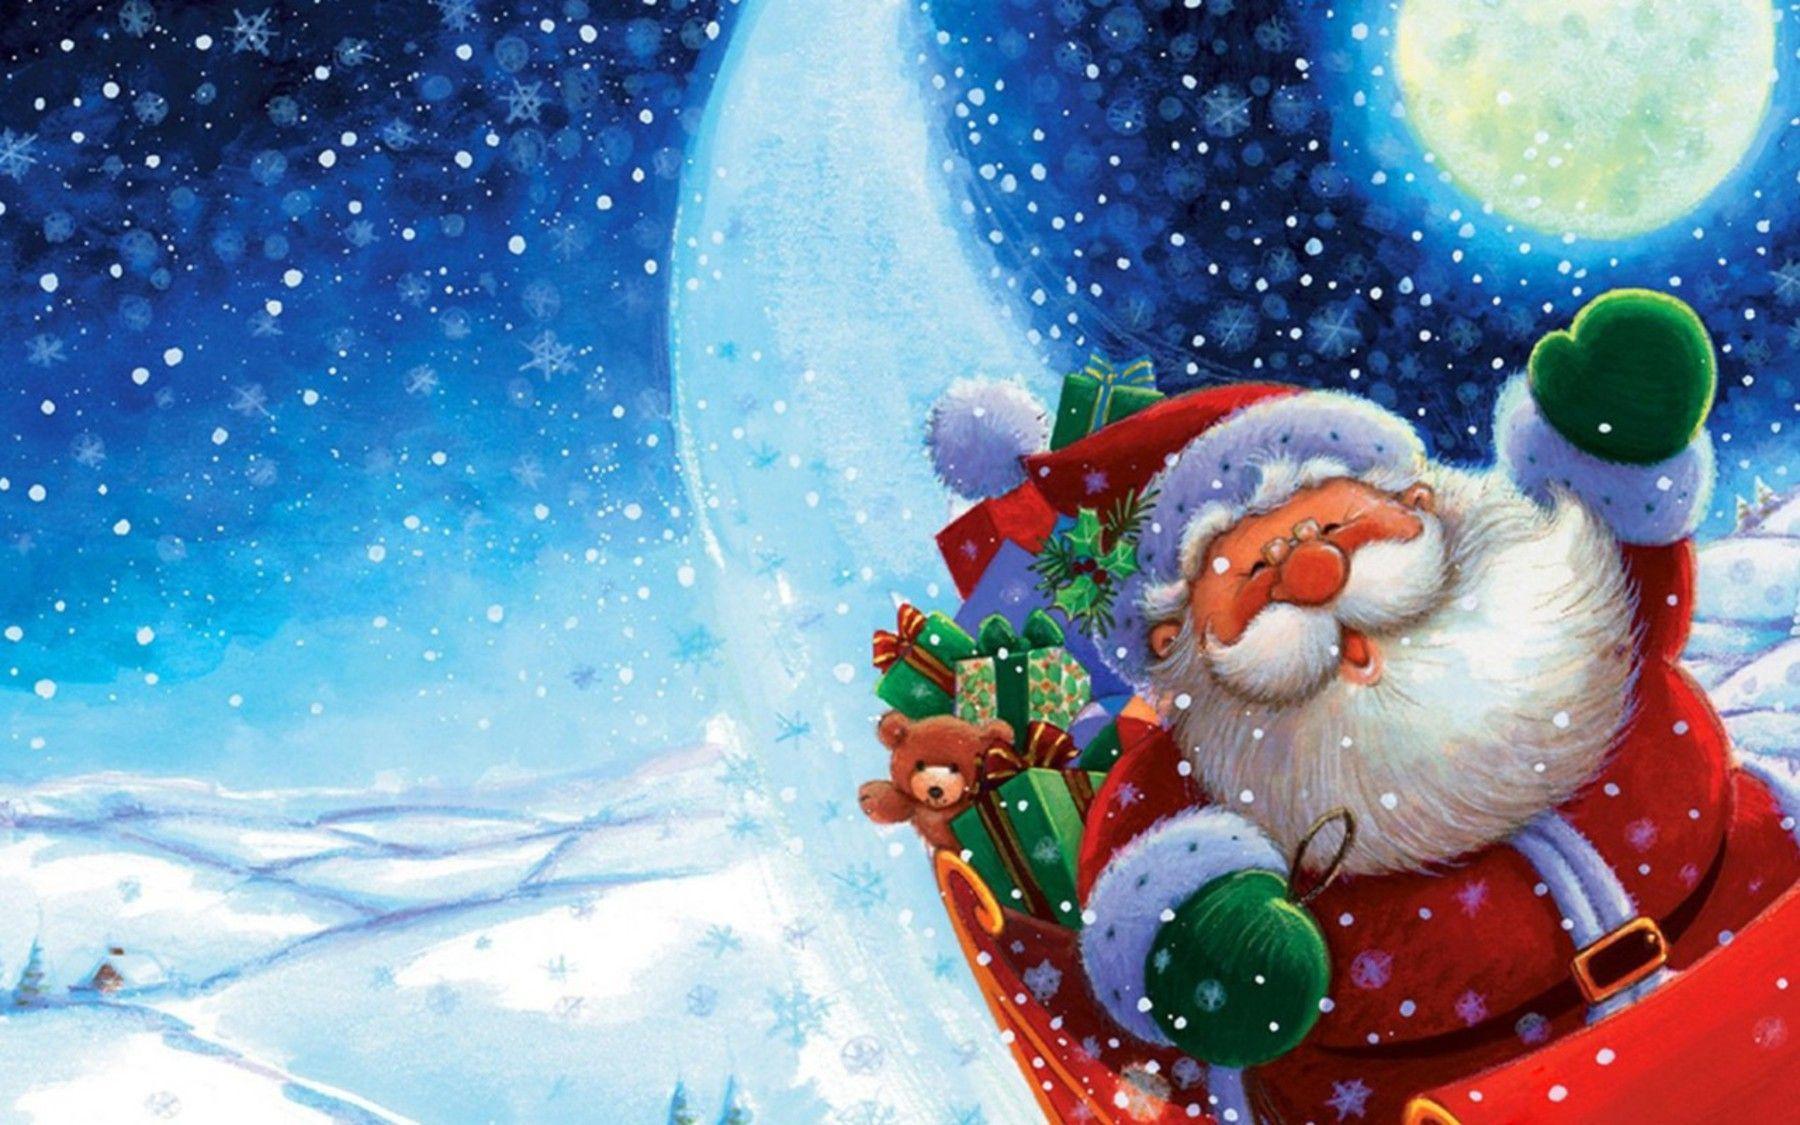 Merry Christmas Santa 2020 Wallpapers